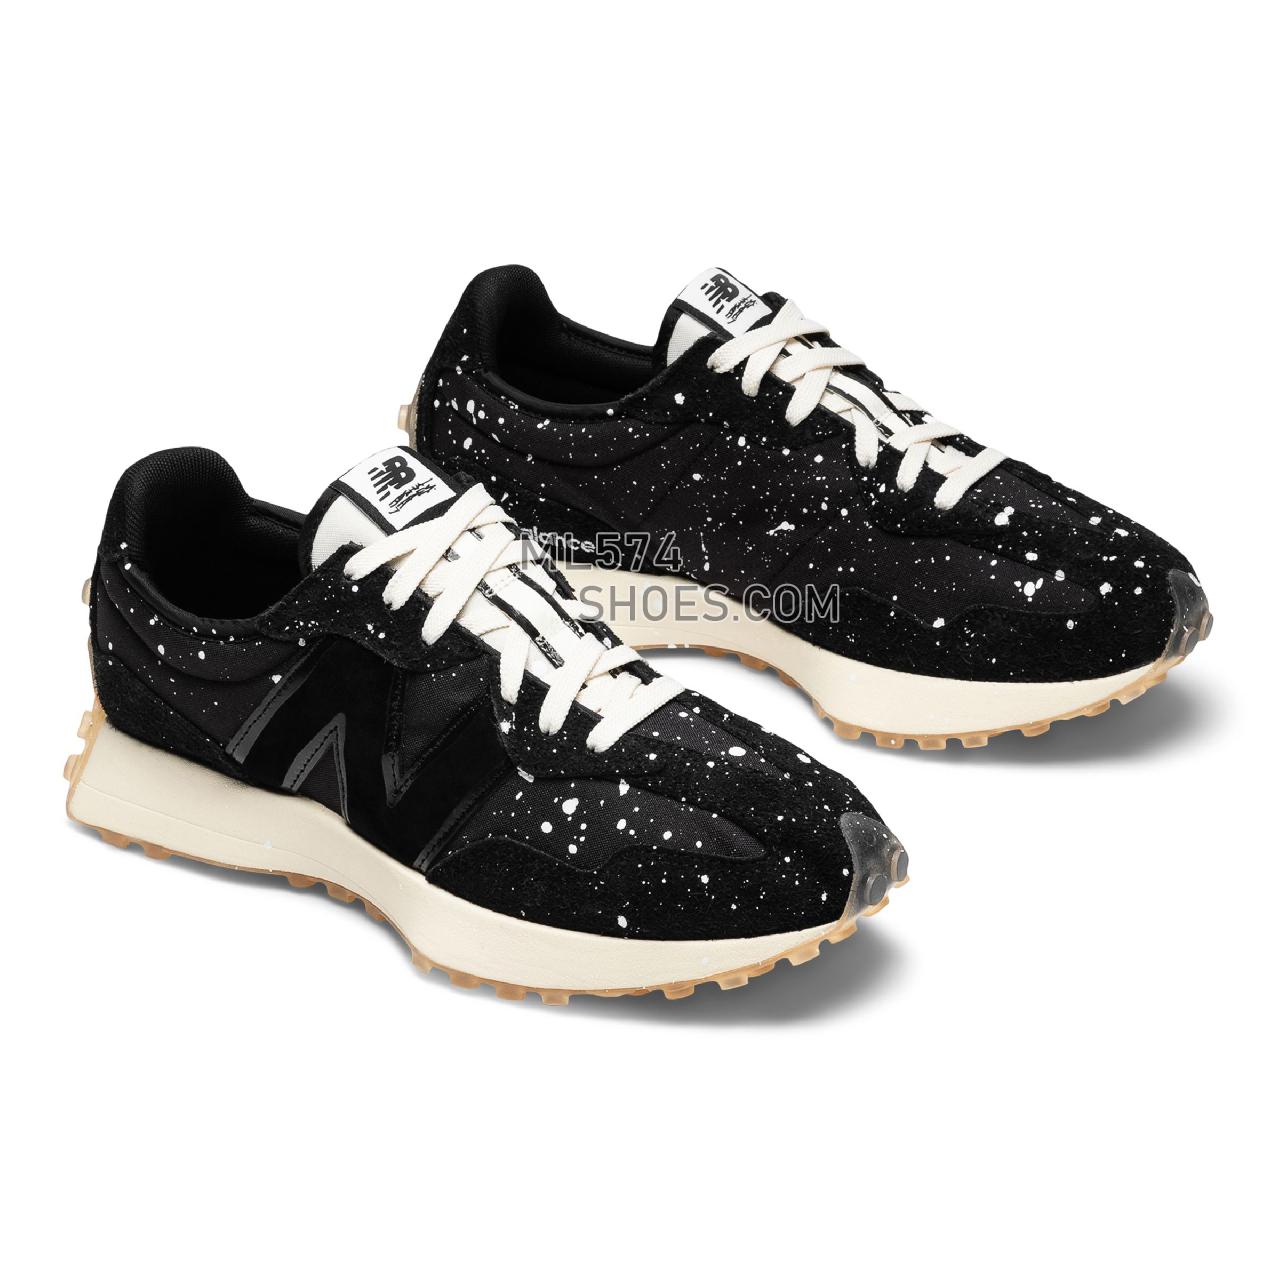 New Balance Joshua Vides 327 - Unisex Men's Women's Sport Style Sneakers - Black with White - MS327JSV